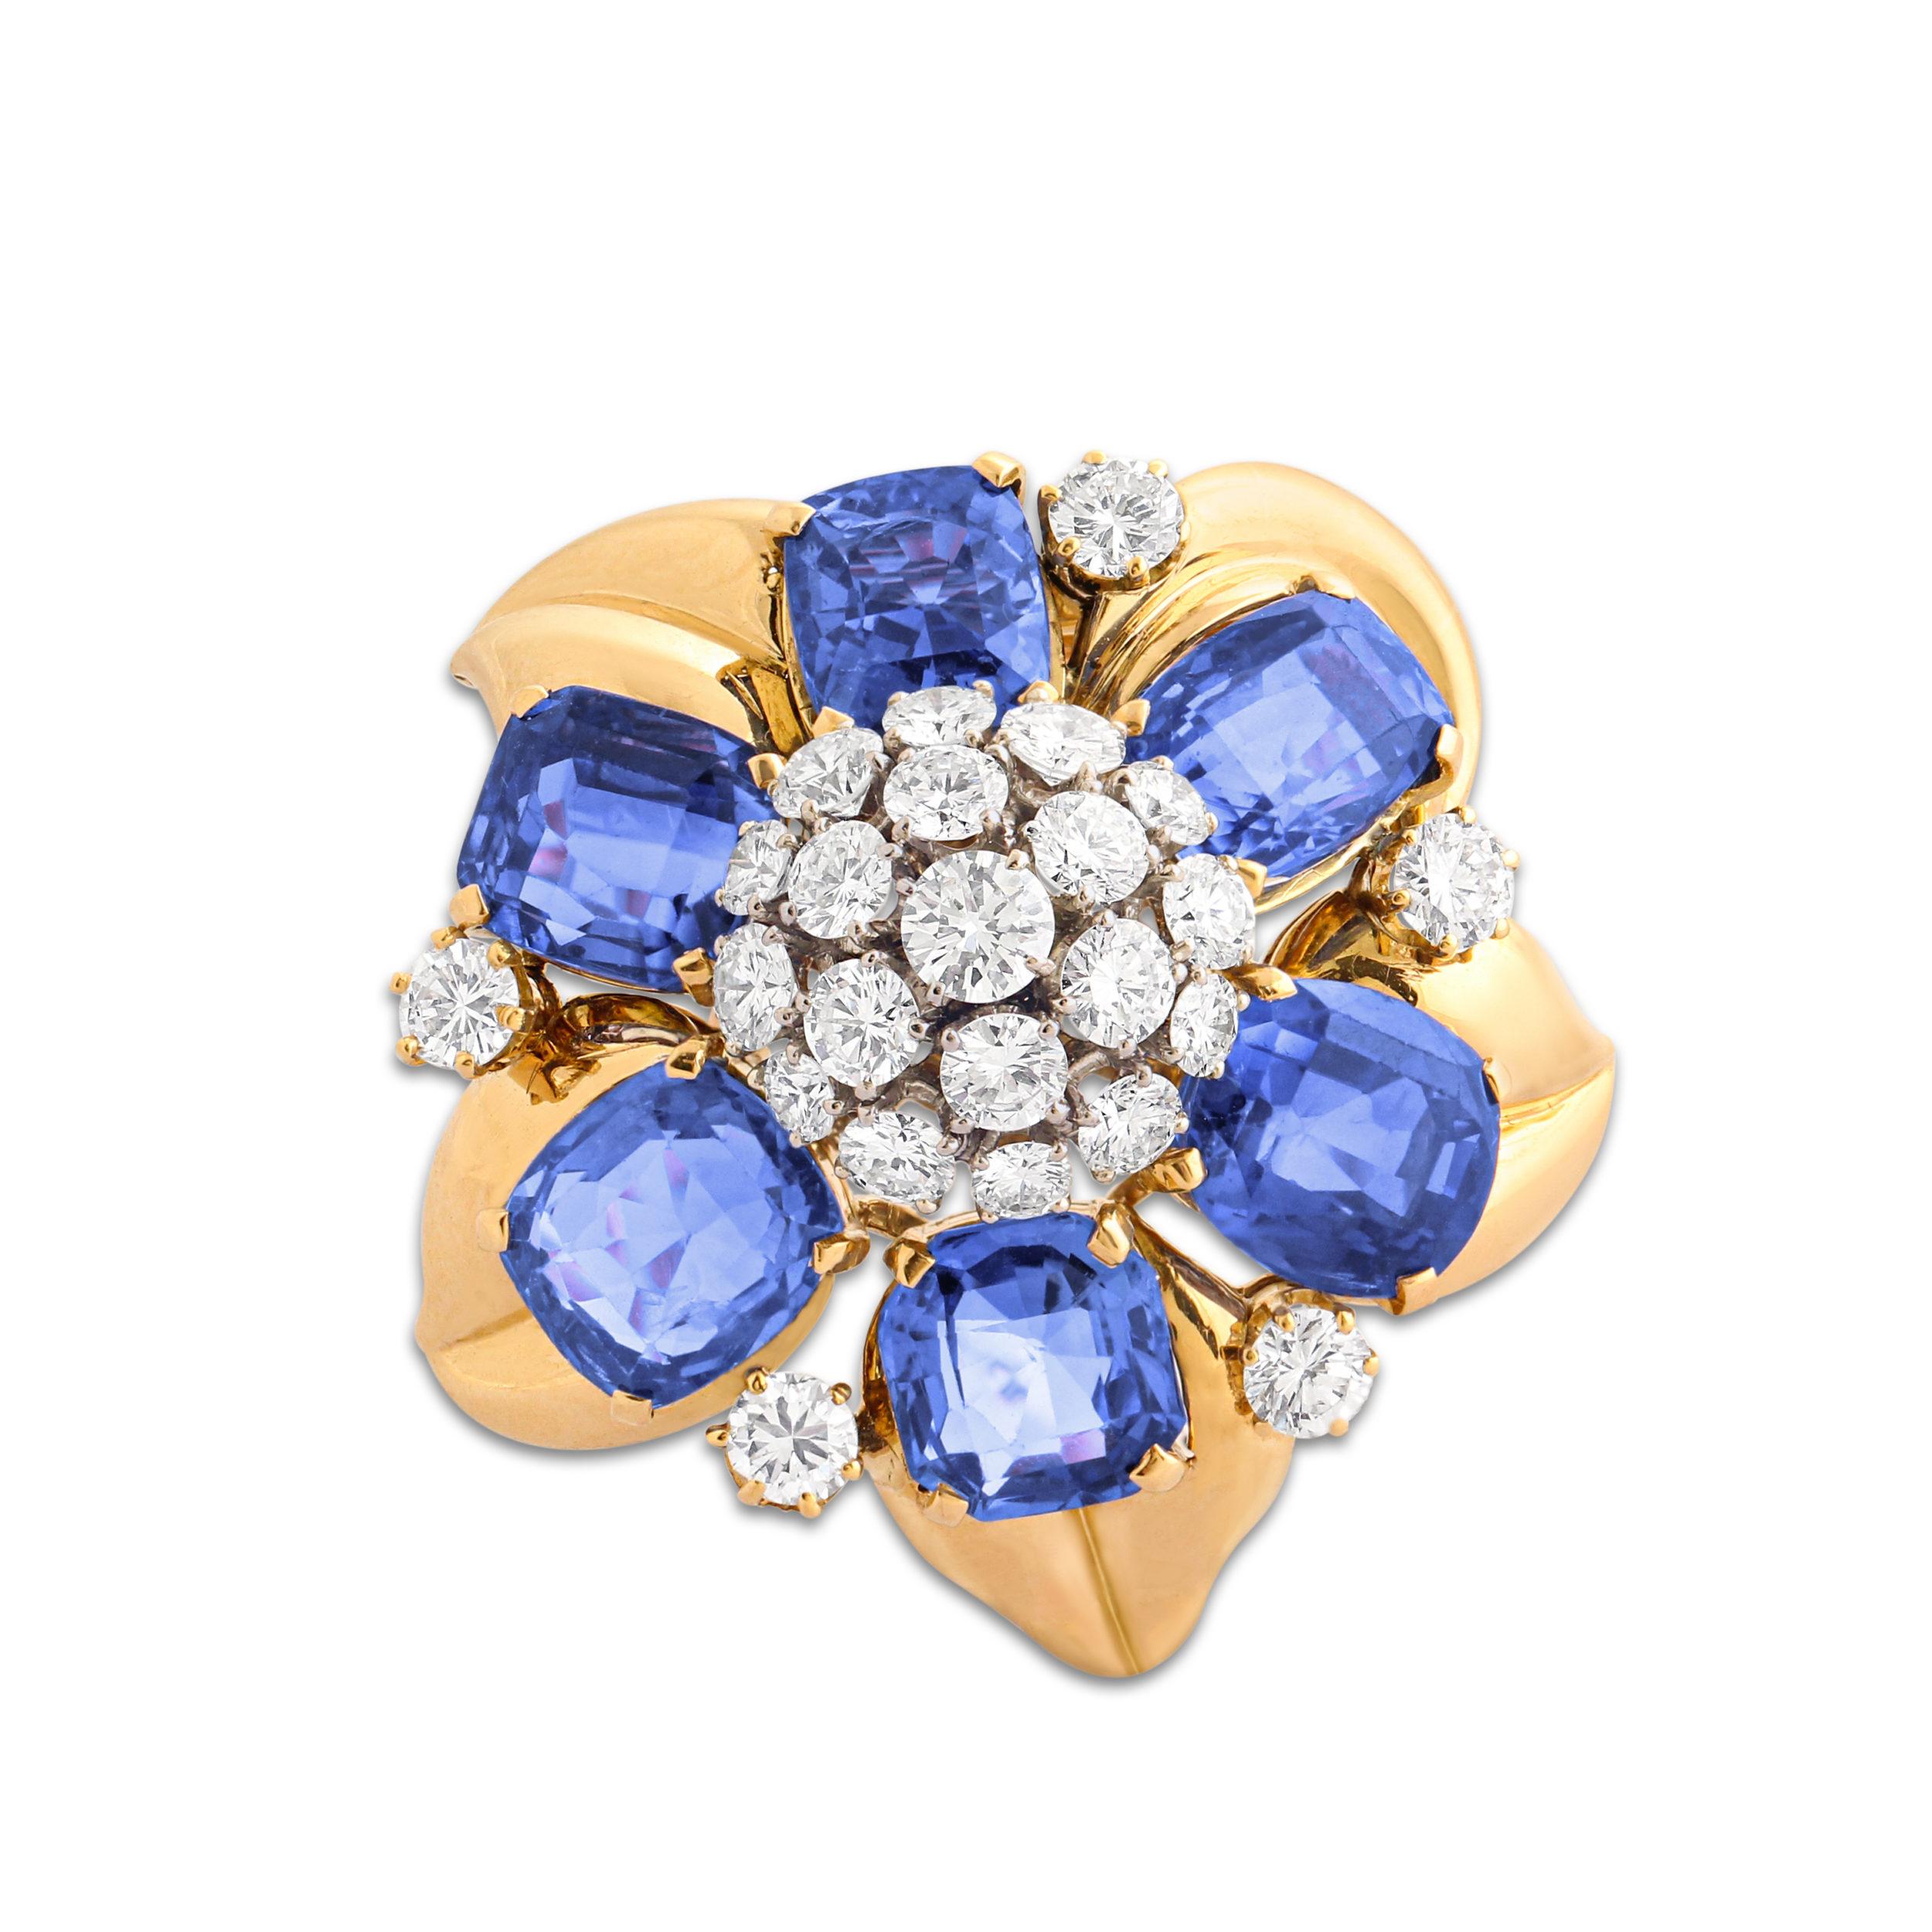 Brilliant Cut 18k Gold, Sapphire & Diamond Flower Brooch by Bulgari